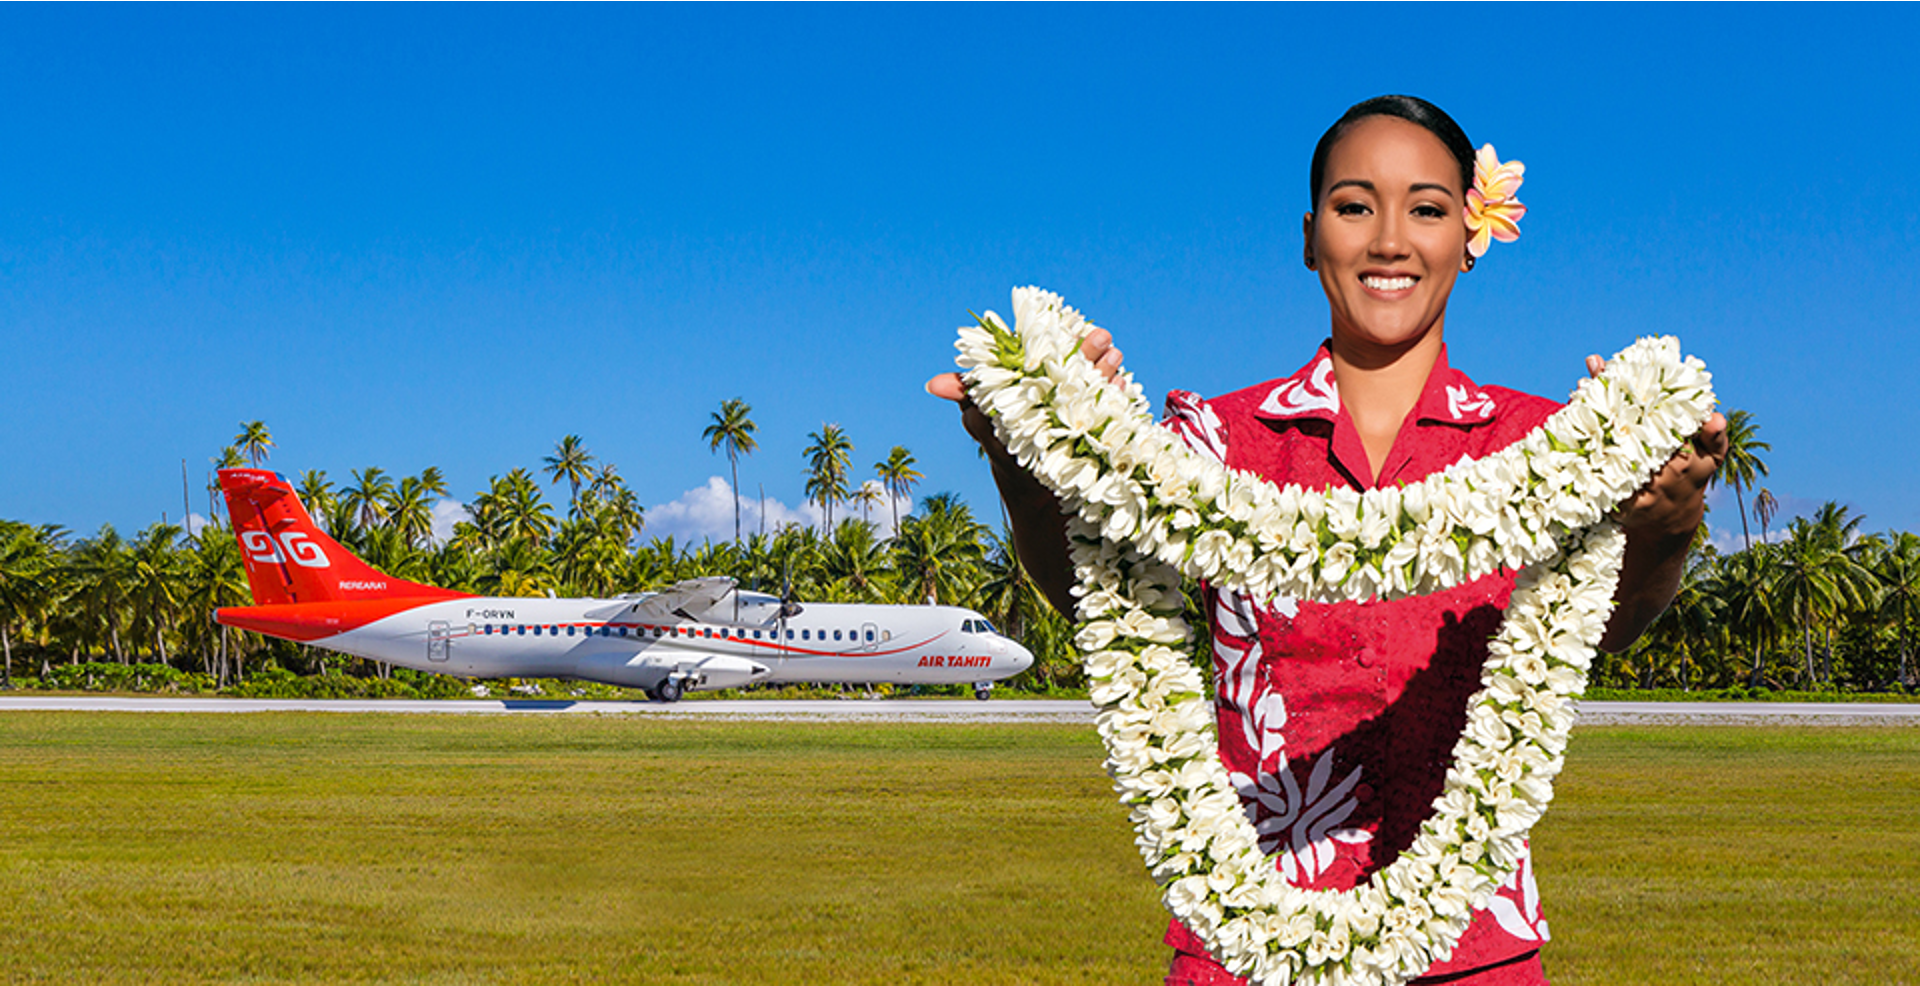 Behind the scenes of the Air Tahiti brand